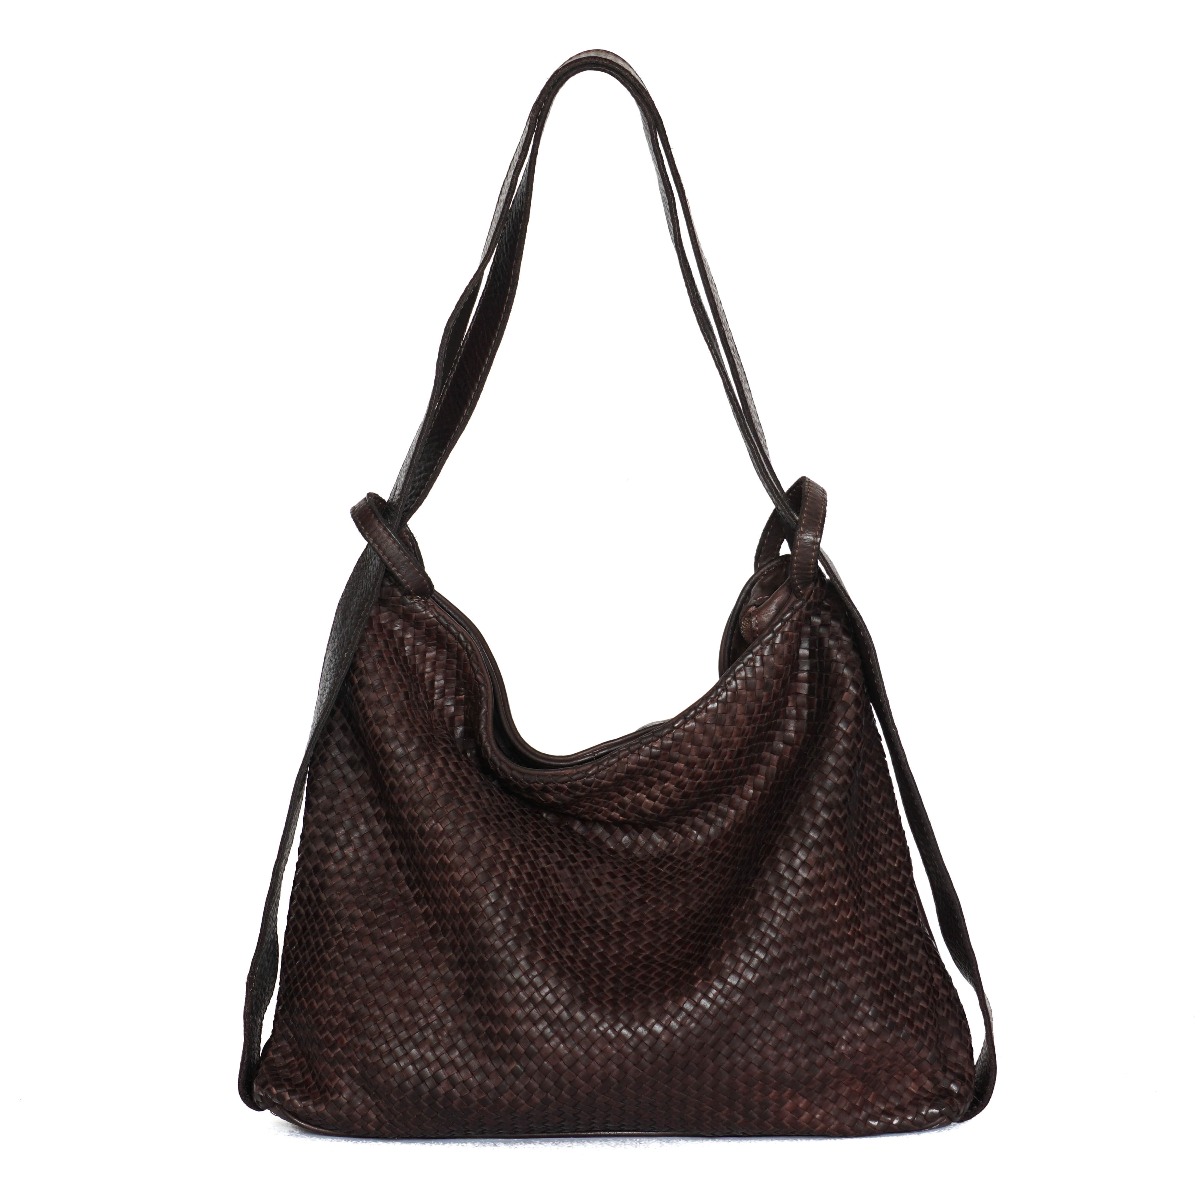 Dark brown women leather hobo bag